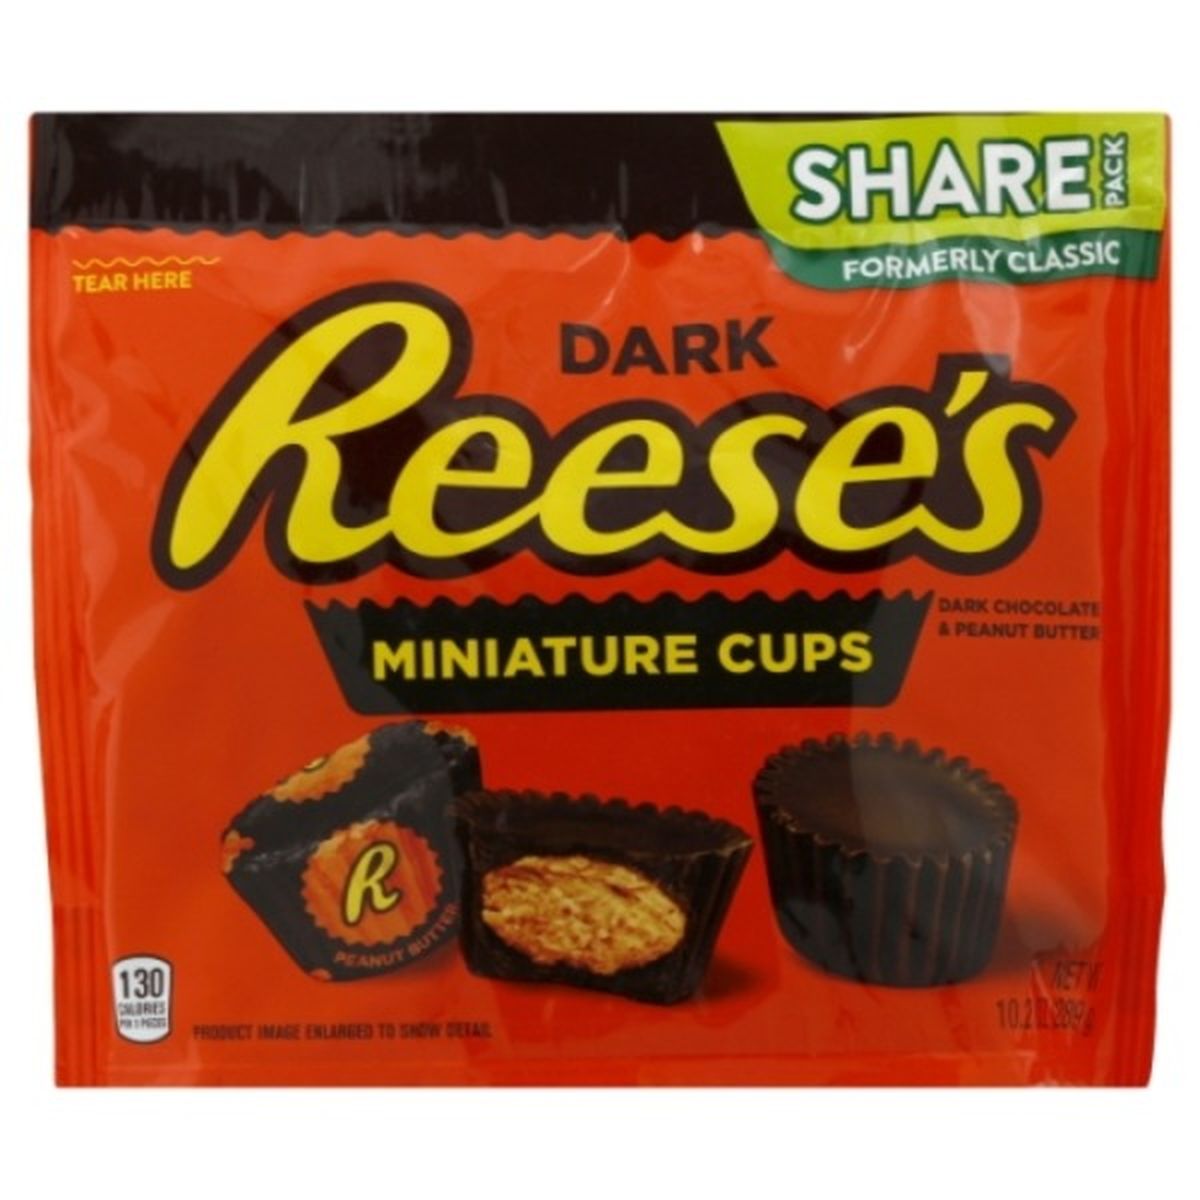 Calories in Reese's Miniature Cups, Dark Chocolate & Peanut Butter, Dark, Share Pack